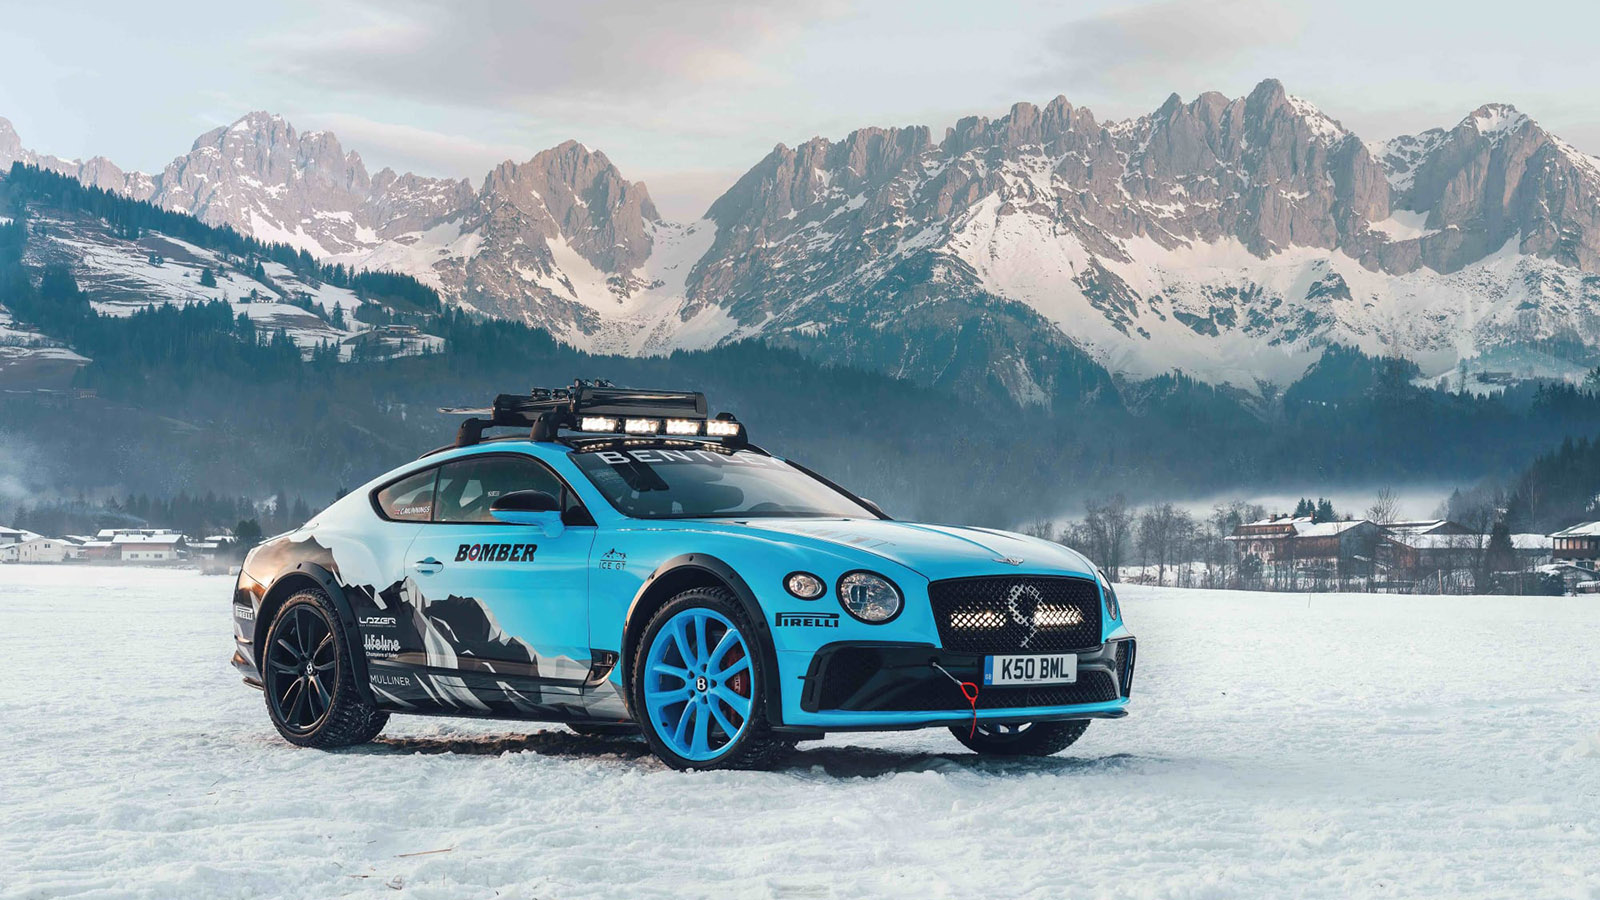 2020-Bentley-Continental-GT-Ice-Race